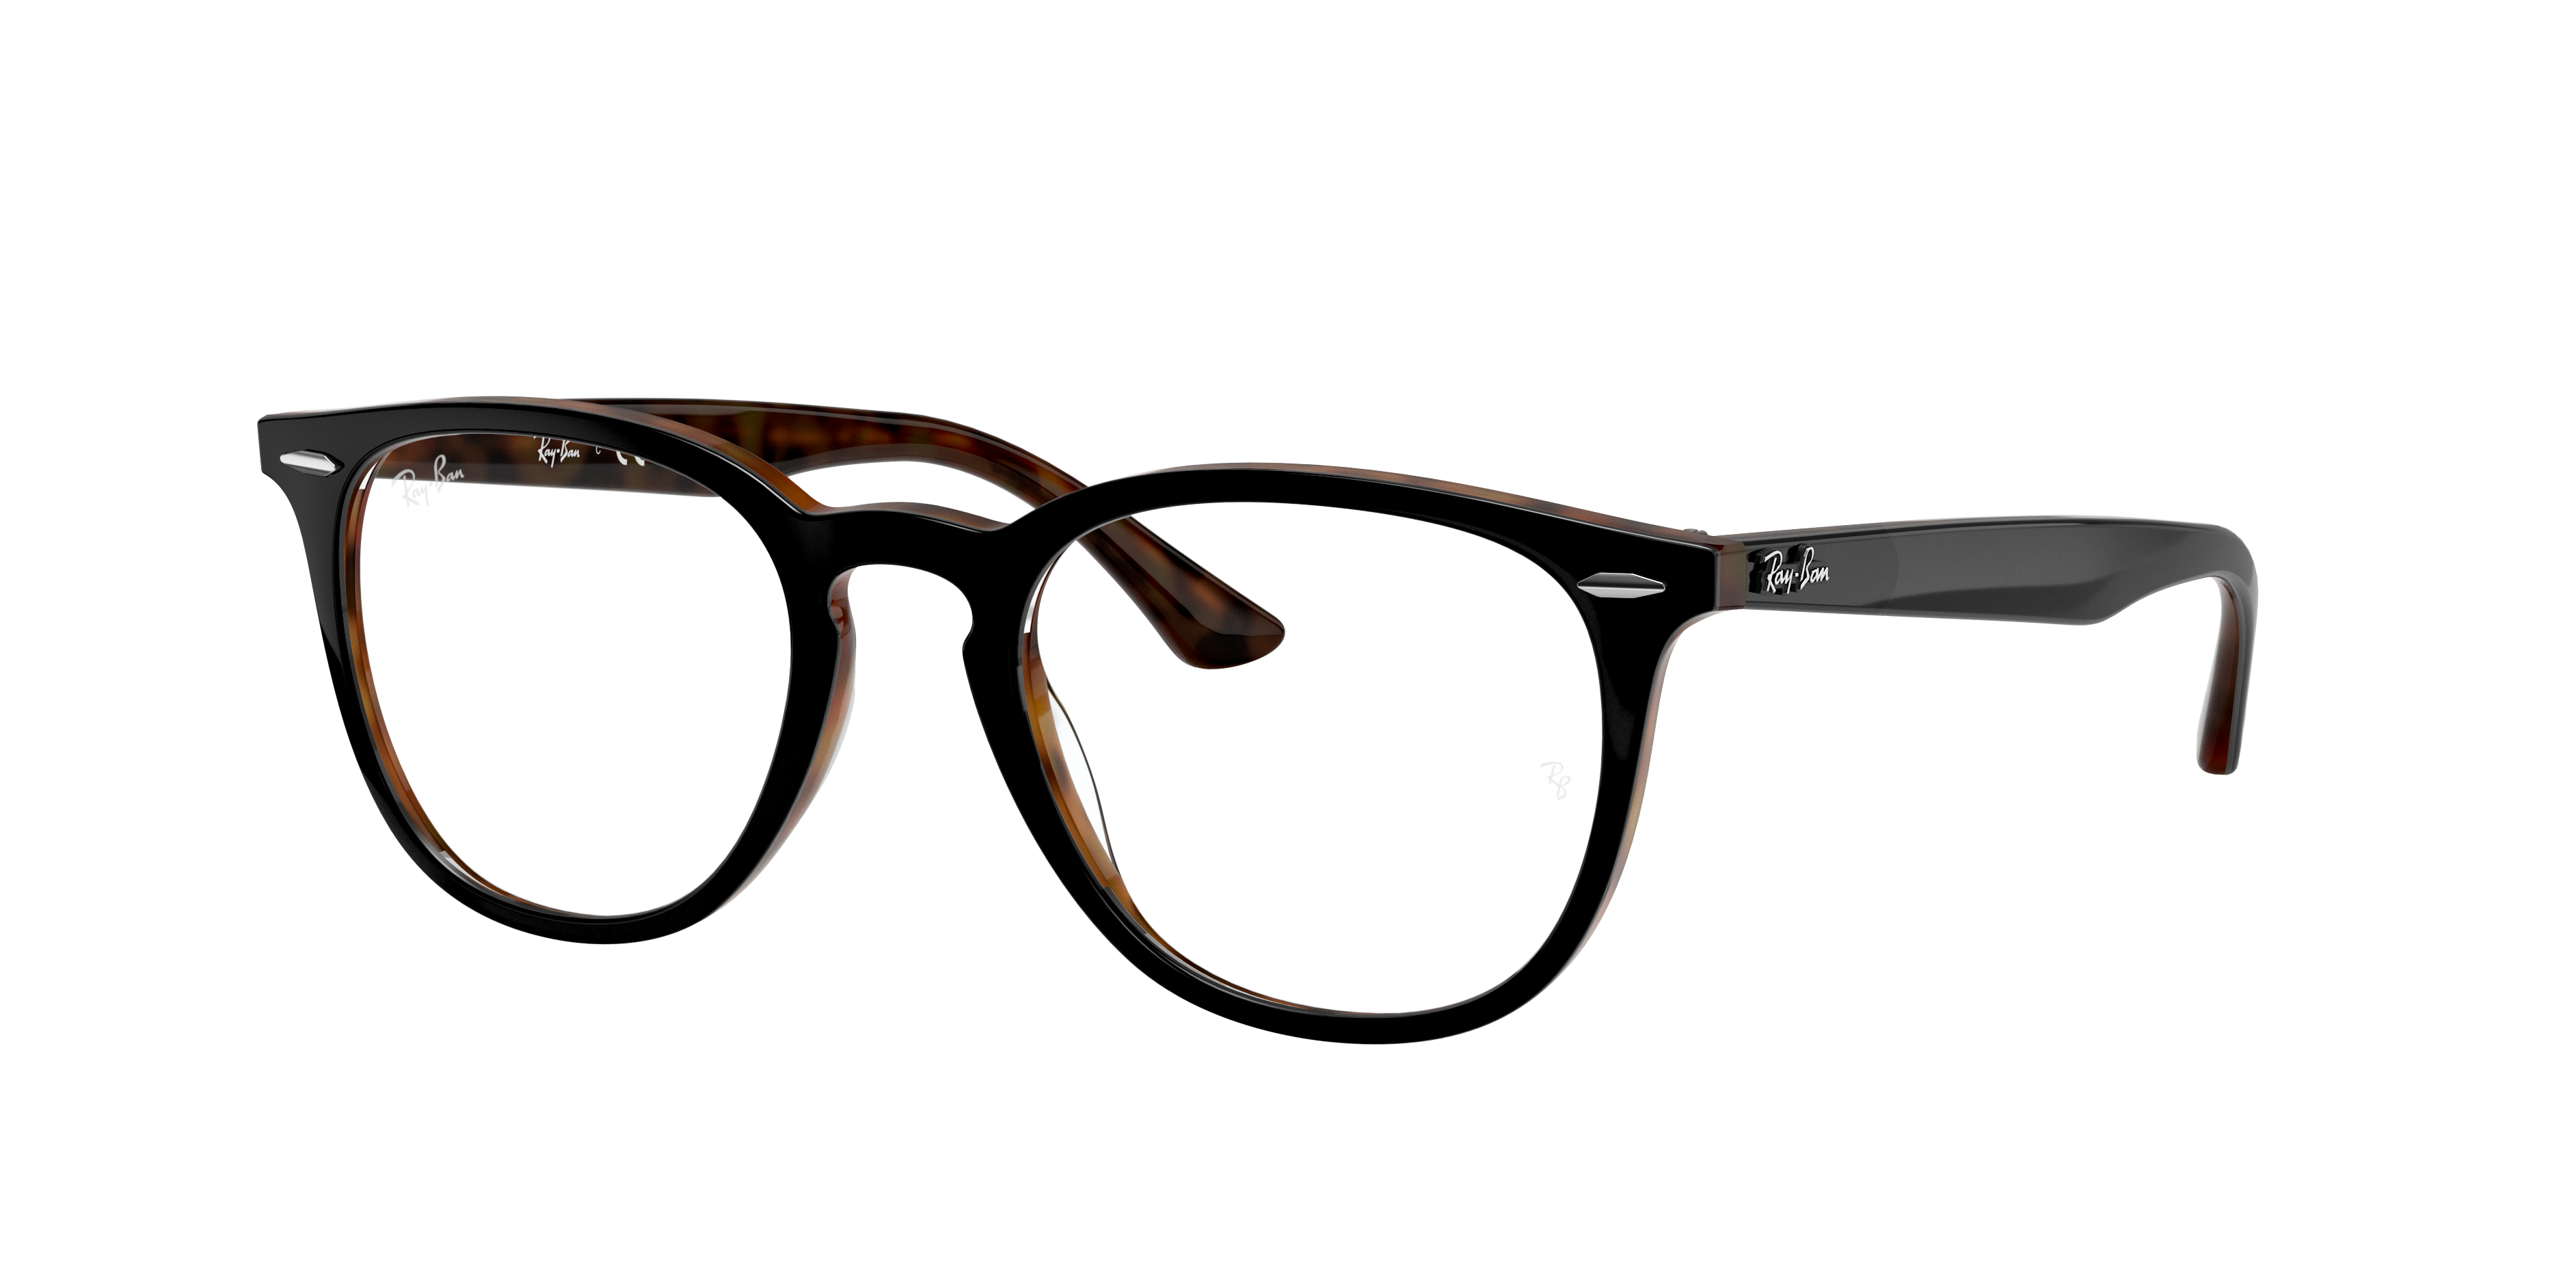 Rb7159 Optics Eyeglasses with Grey On Havana Frame | Ray-Ban®